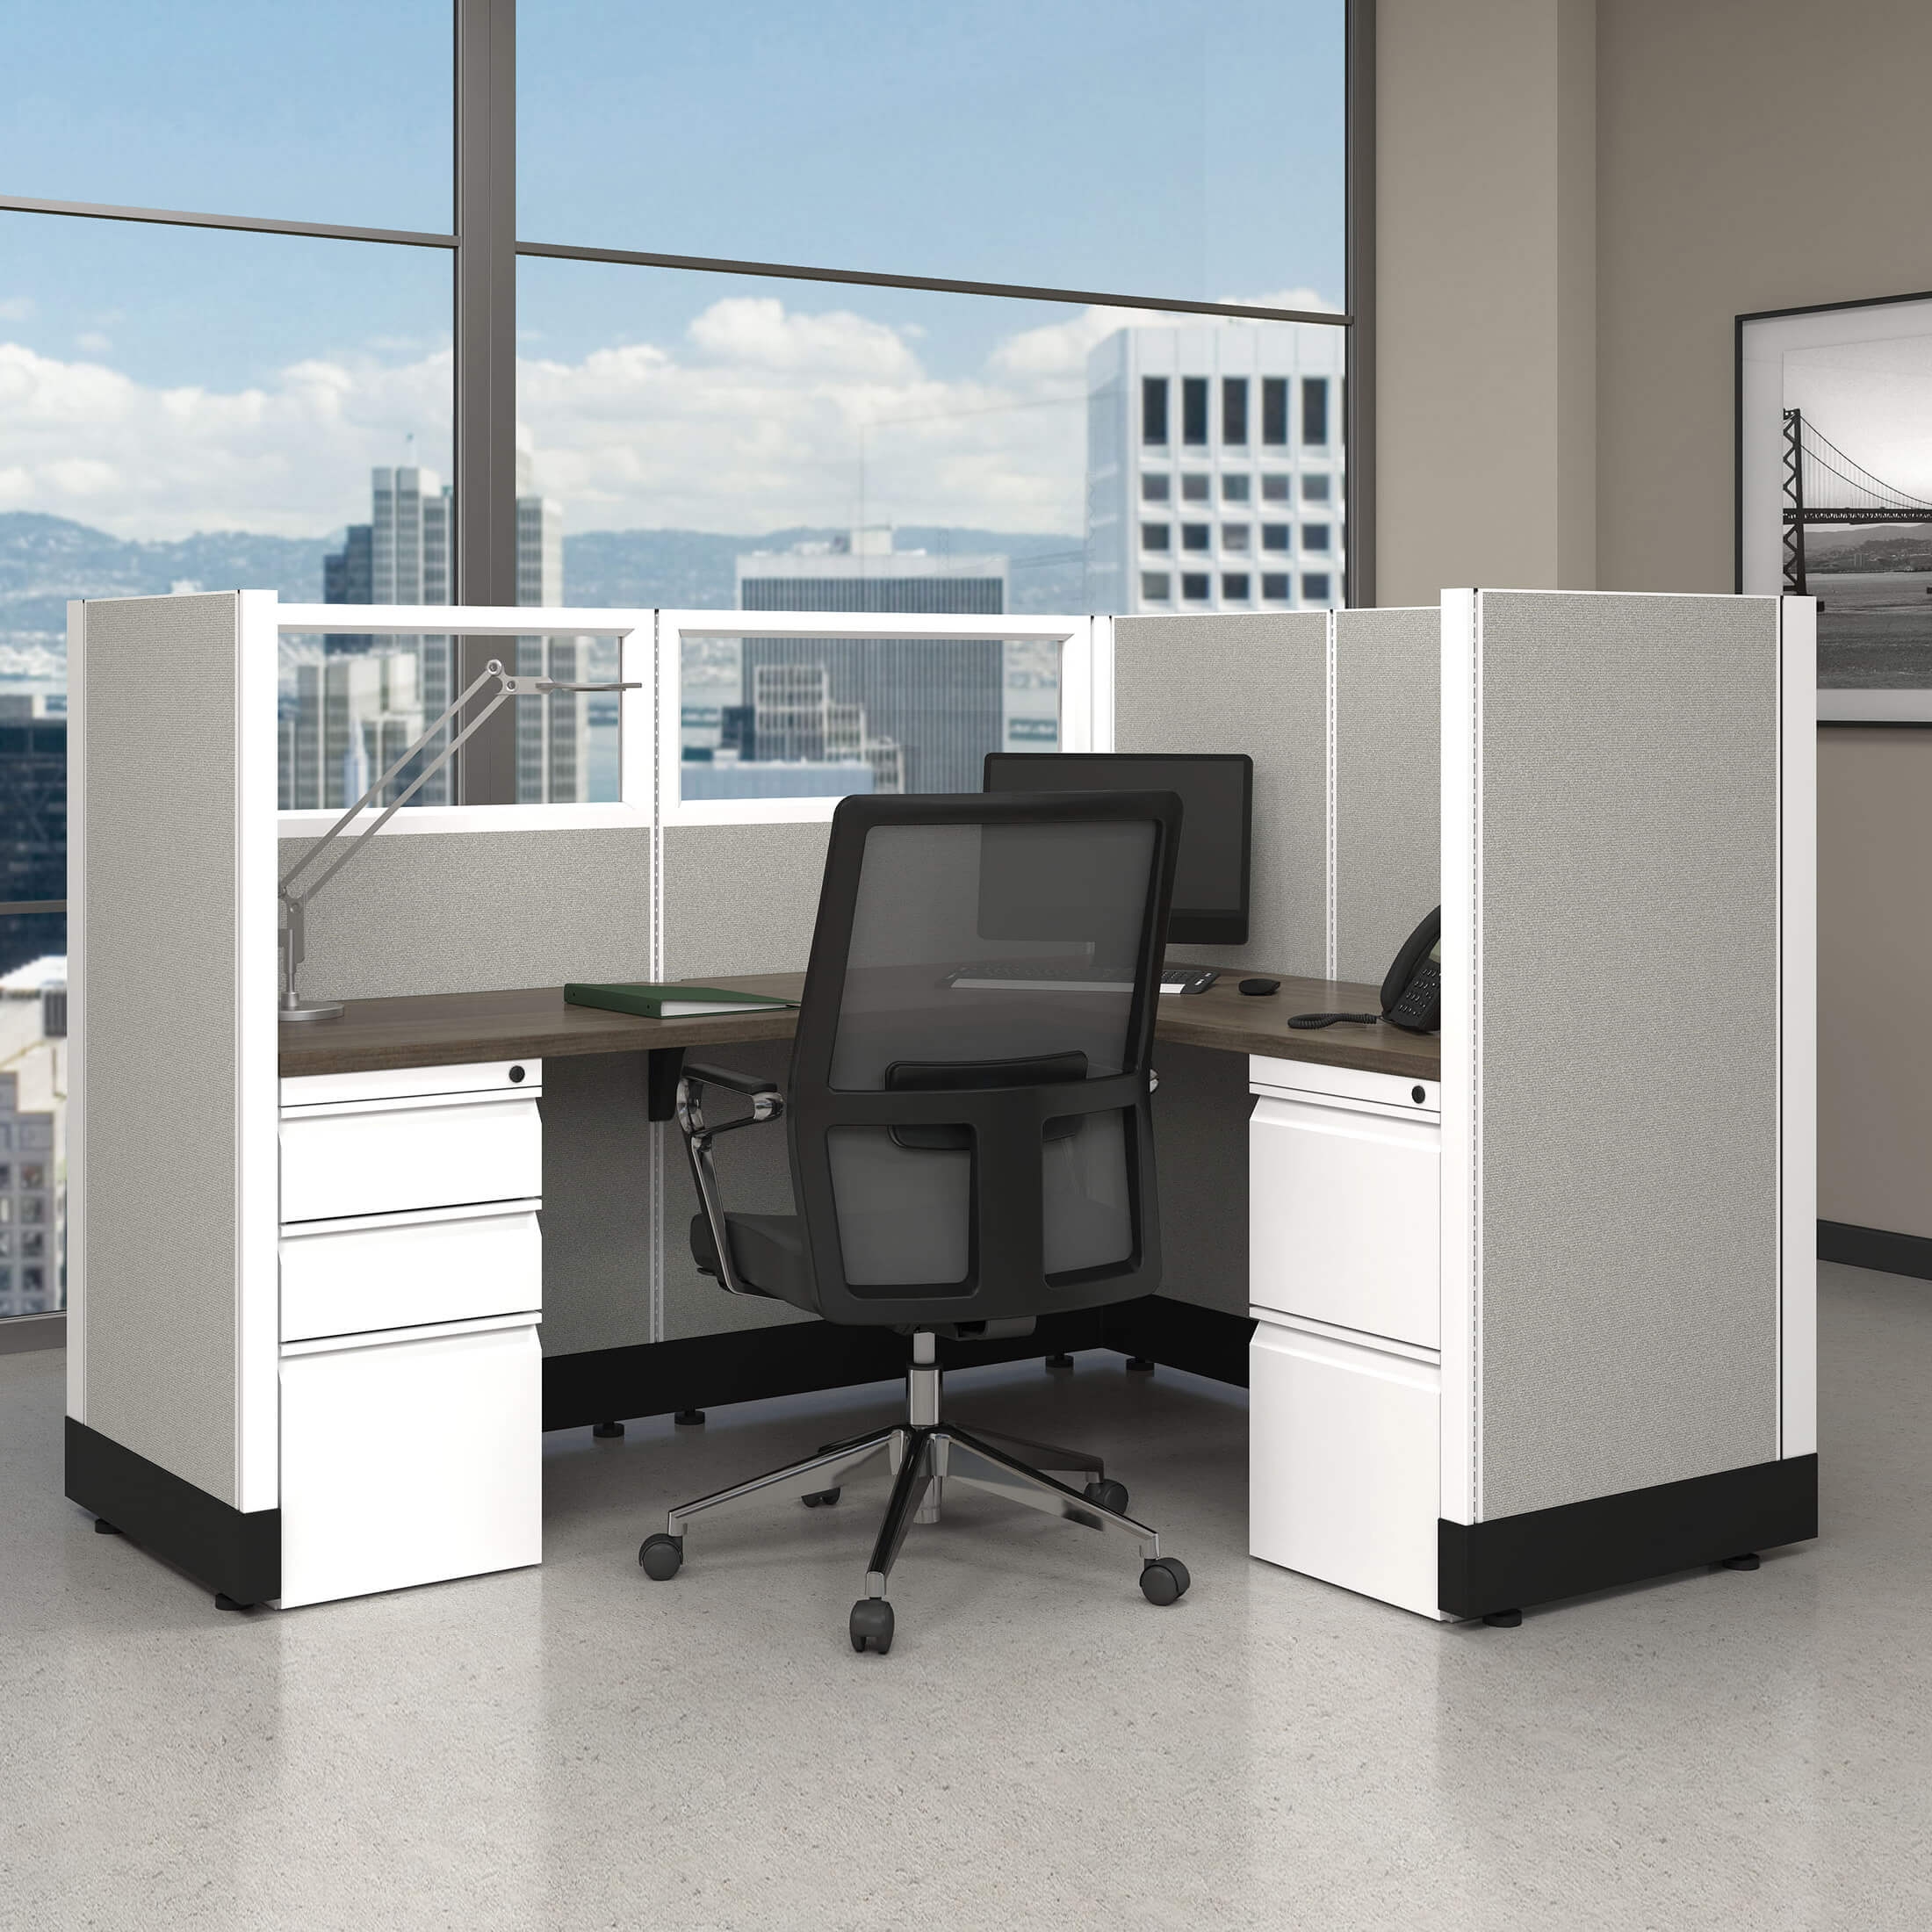 modular-office-furniture-modular-office-furniture-systems-1.jpg